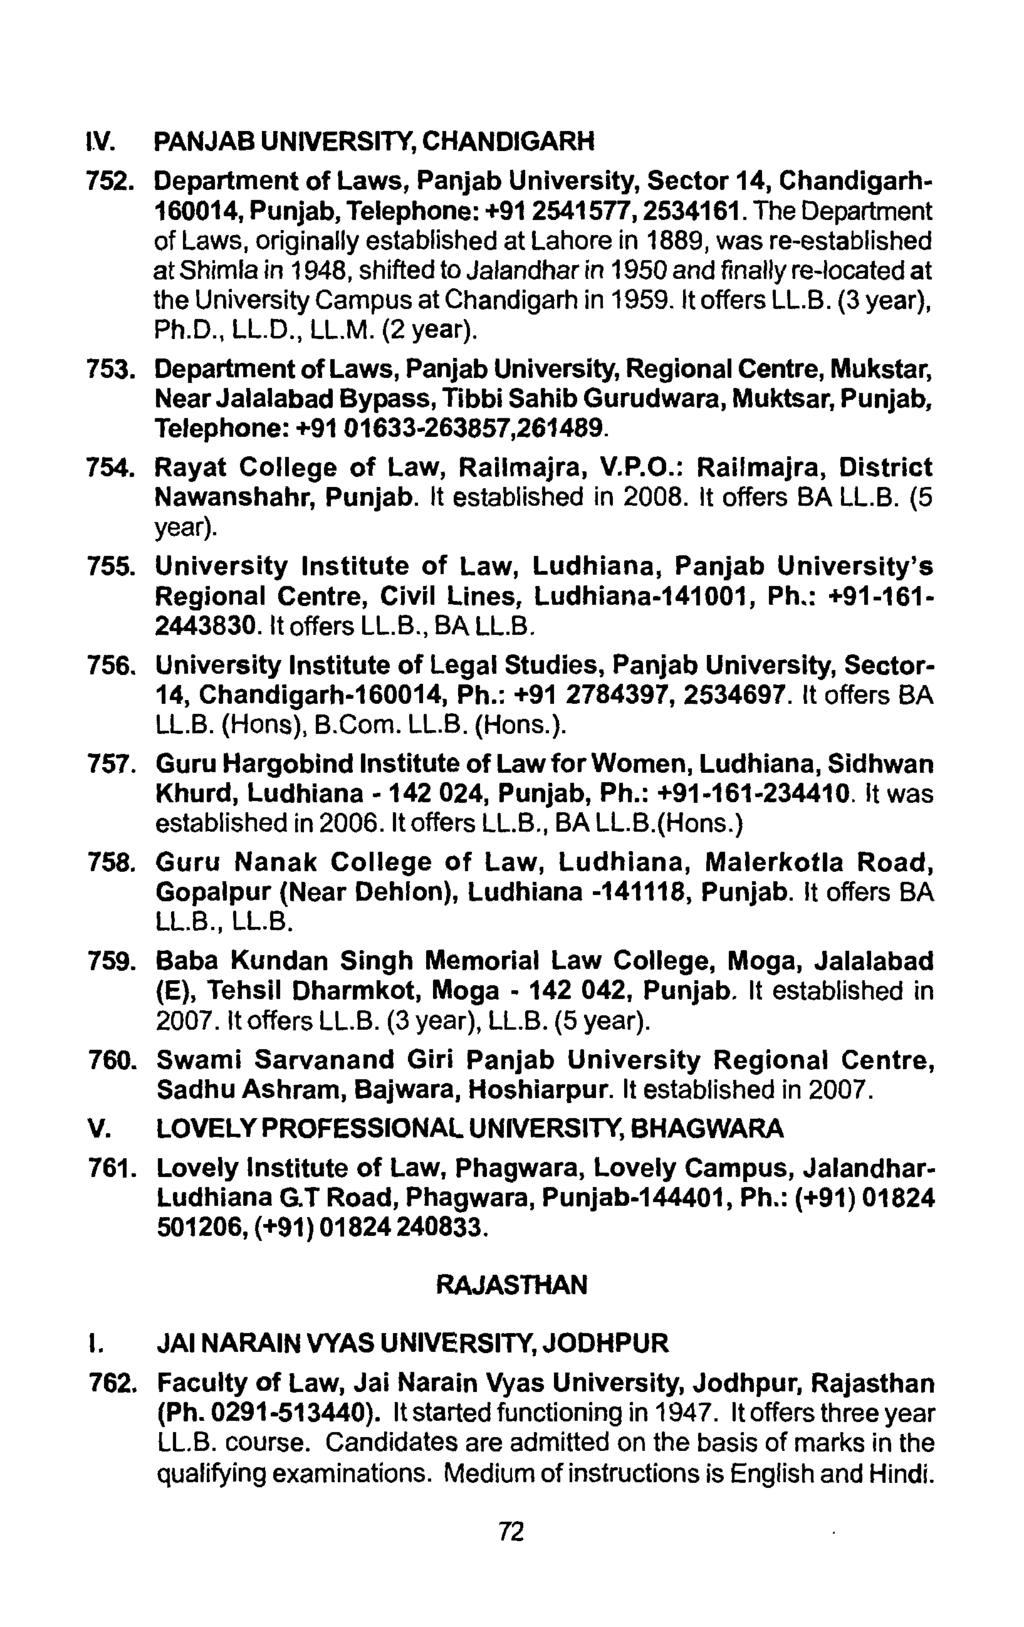 IV. PANJAB UNIVERSITY, CHANDIGARH 752. Department of Laws, Panjab University, Sector 14, Chandigarh- 160014, Punjab, Telephone: +91 2541577,2534161.